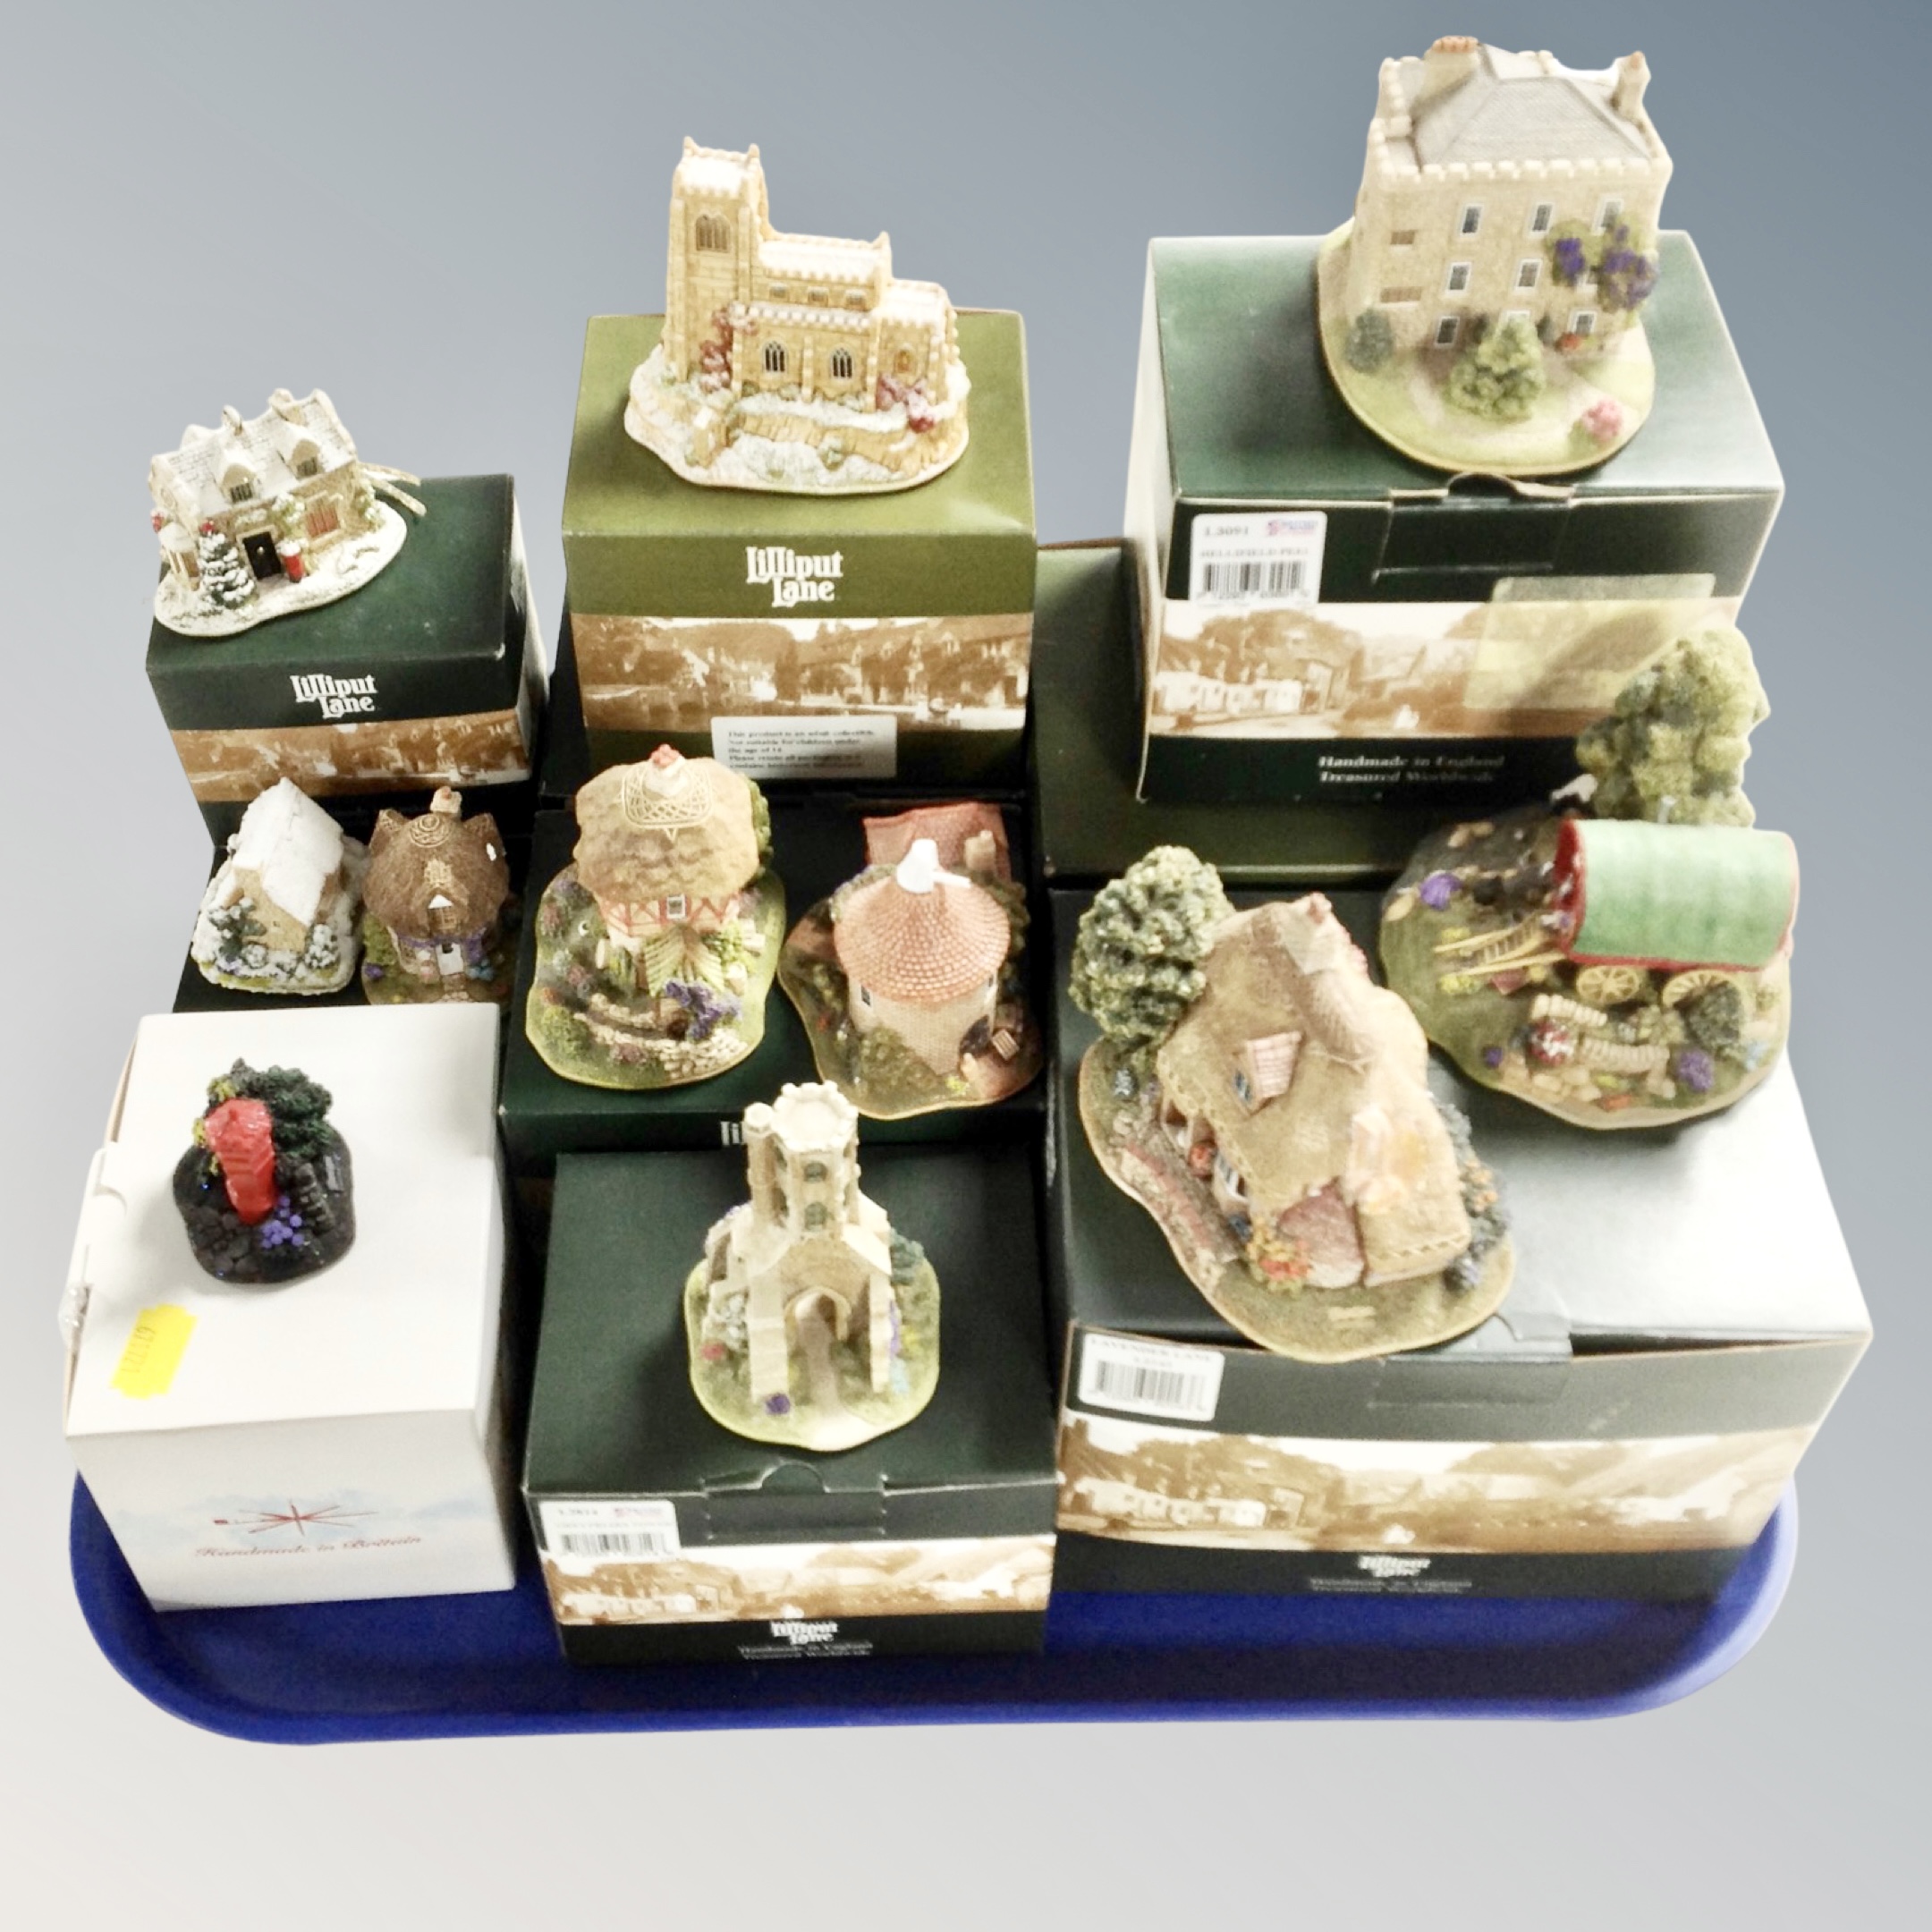 A tray of eleven Lilliput Lane ornaments, boxed.